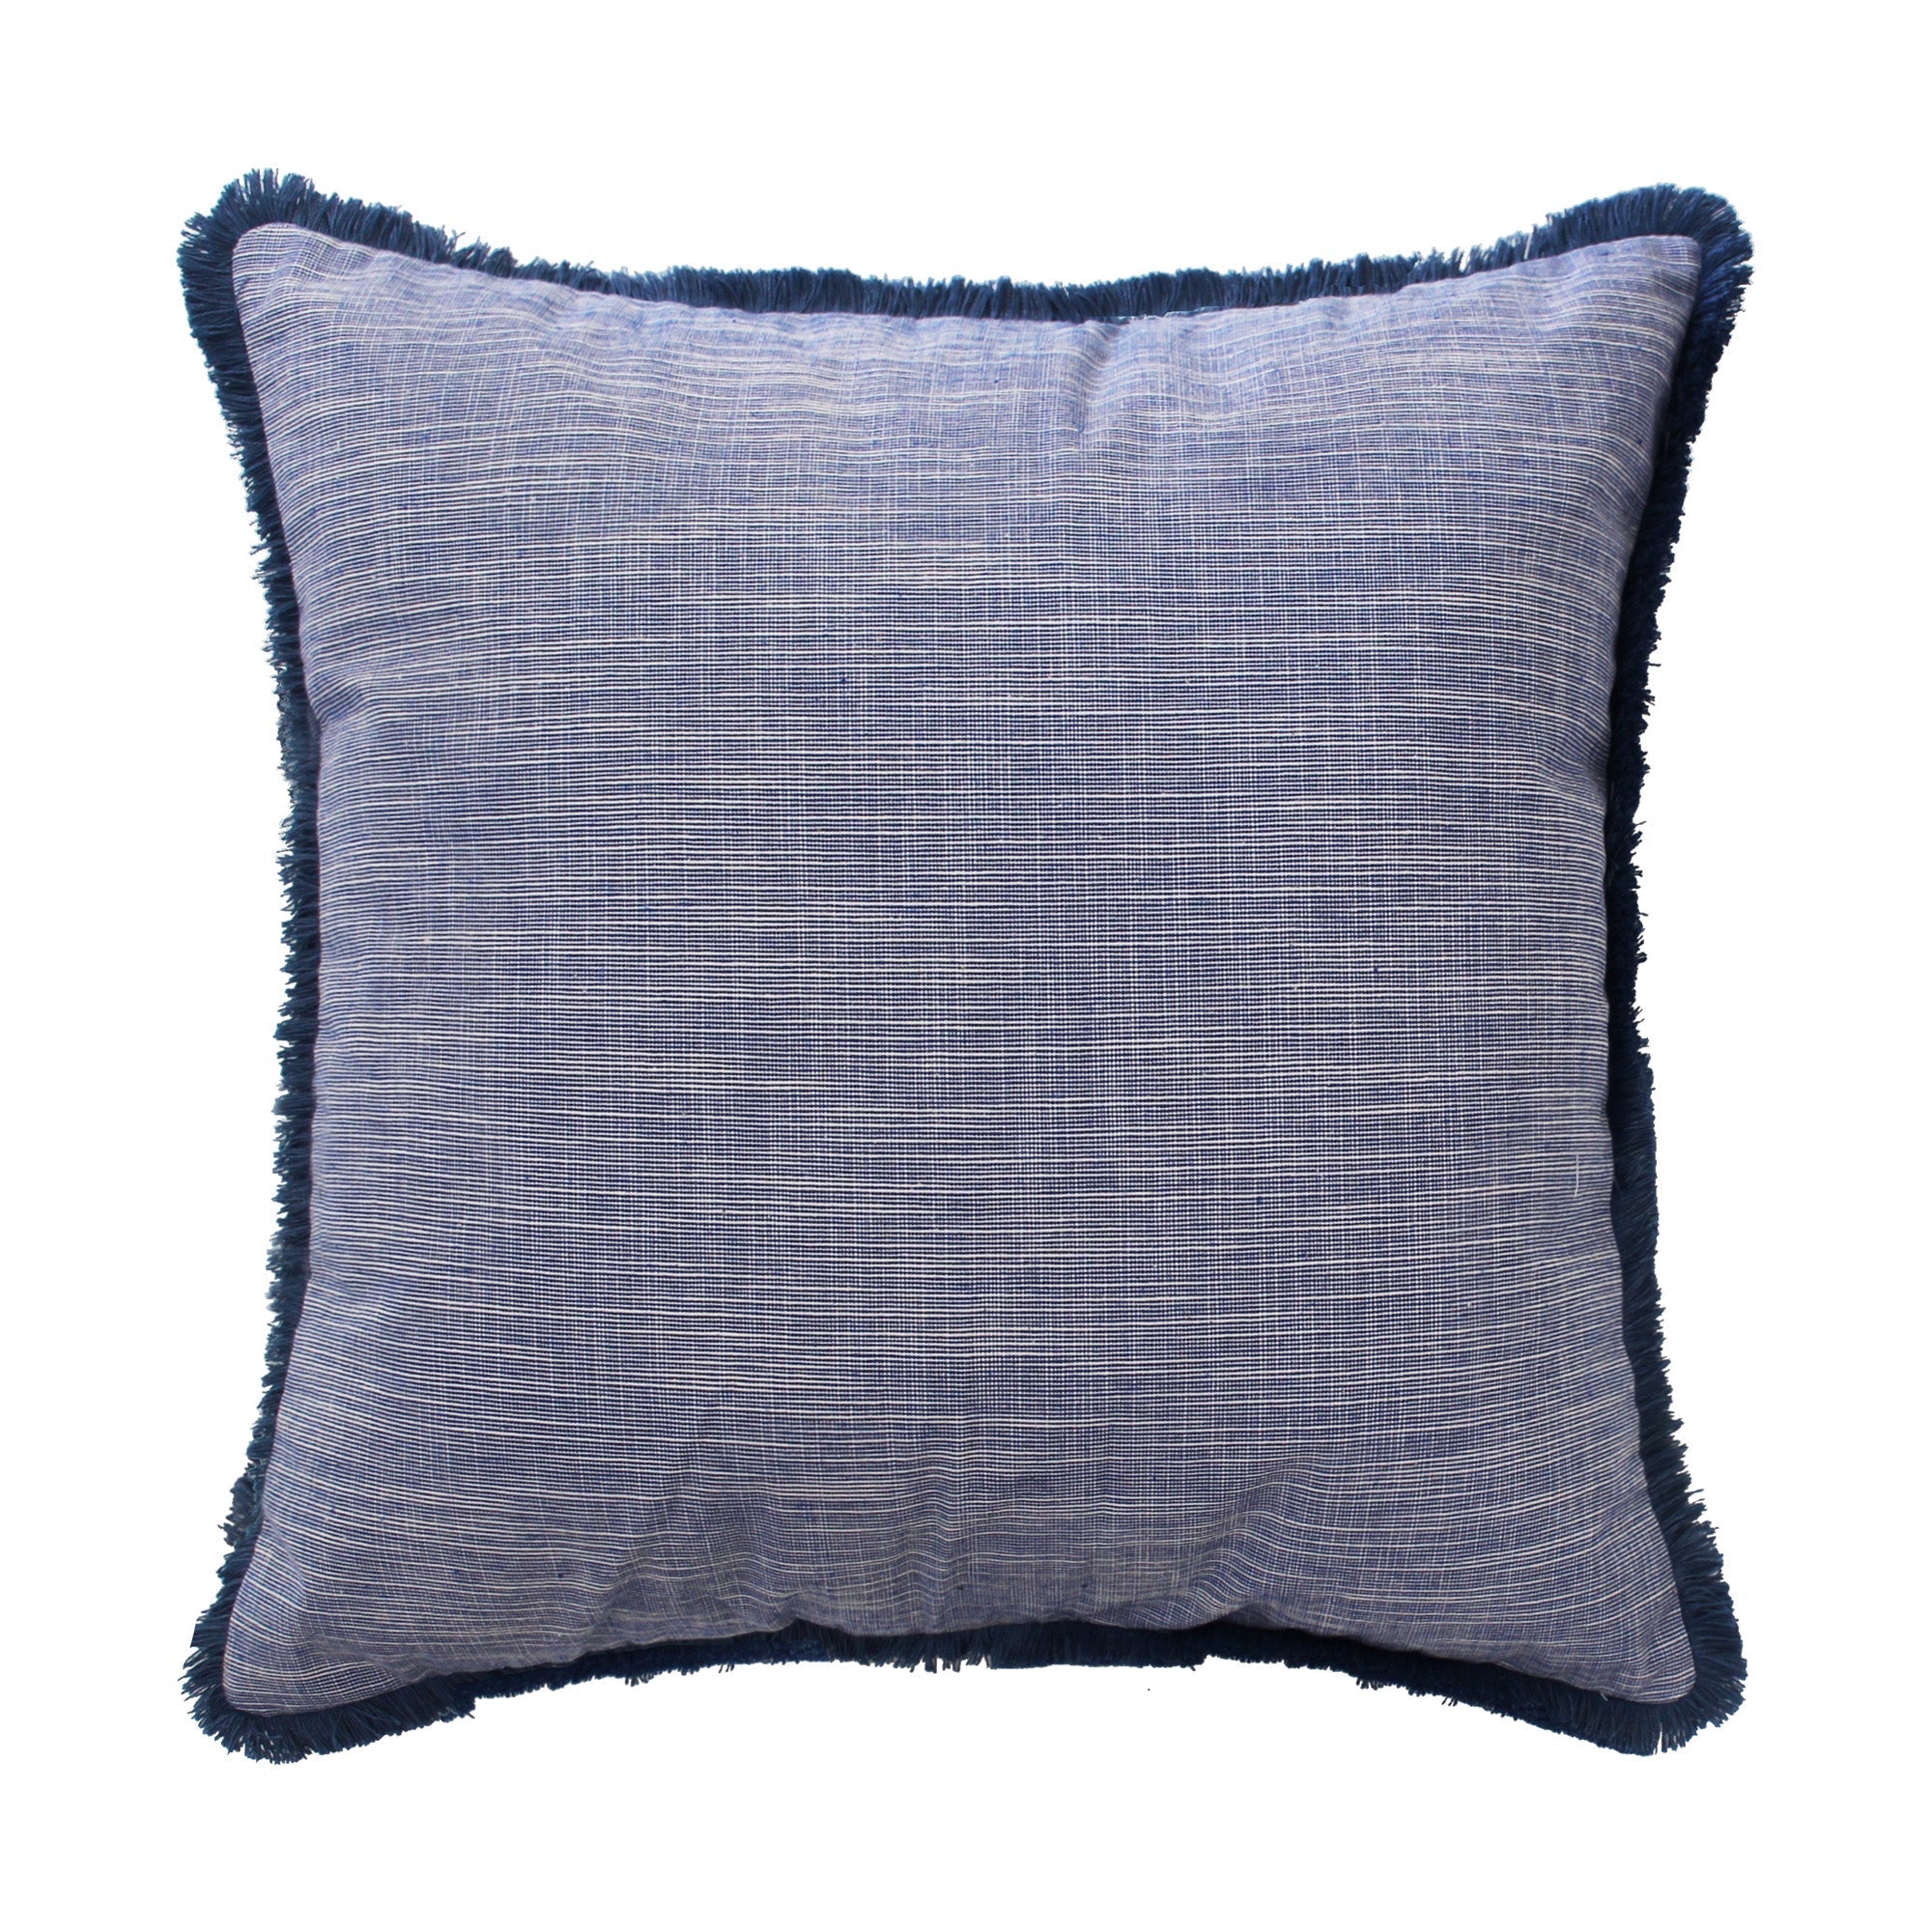 Pickford Blue Pillow 18x18